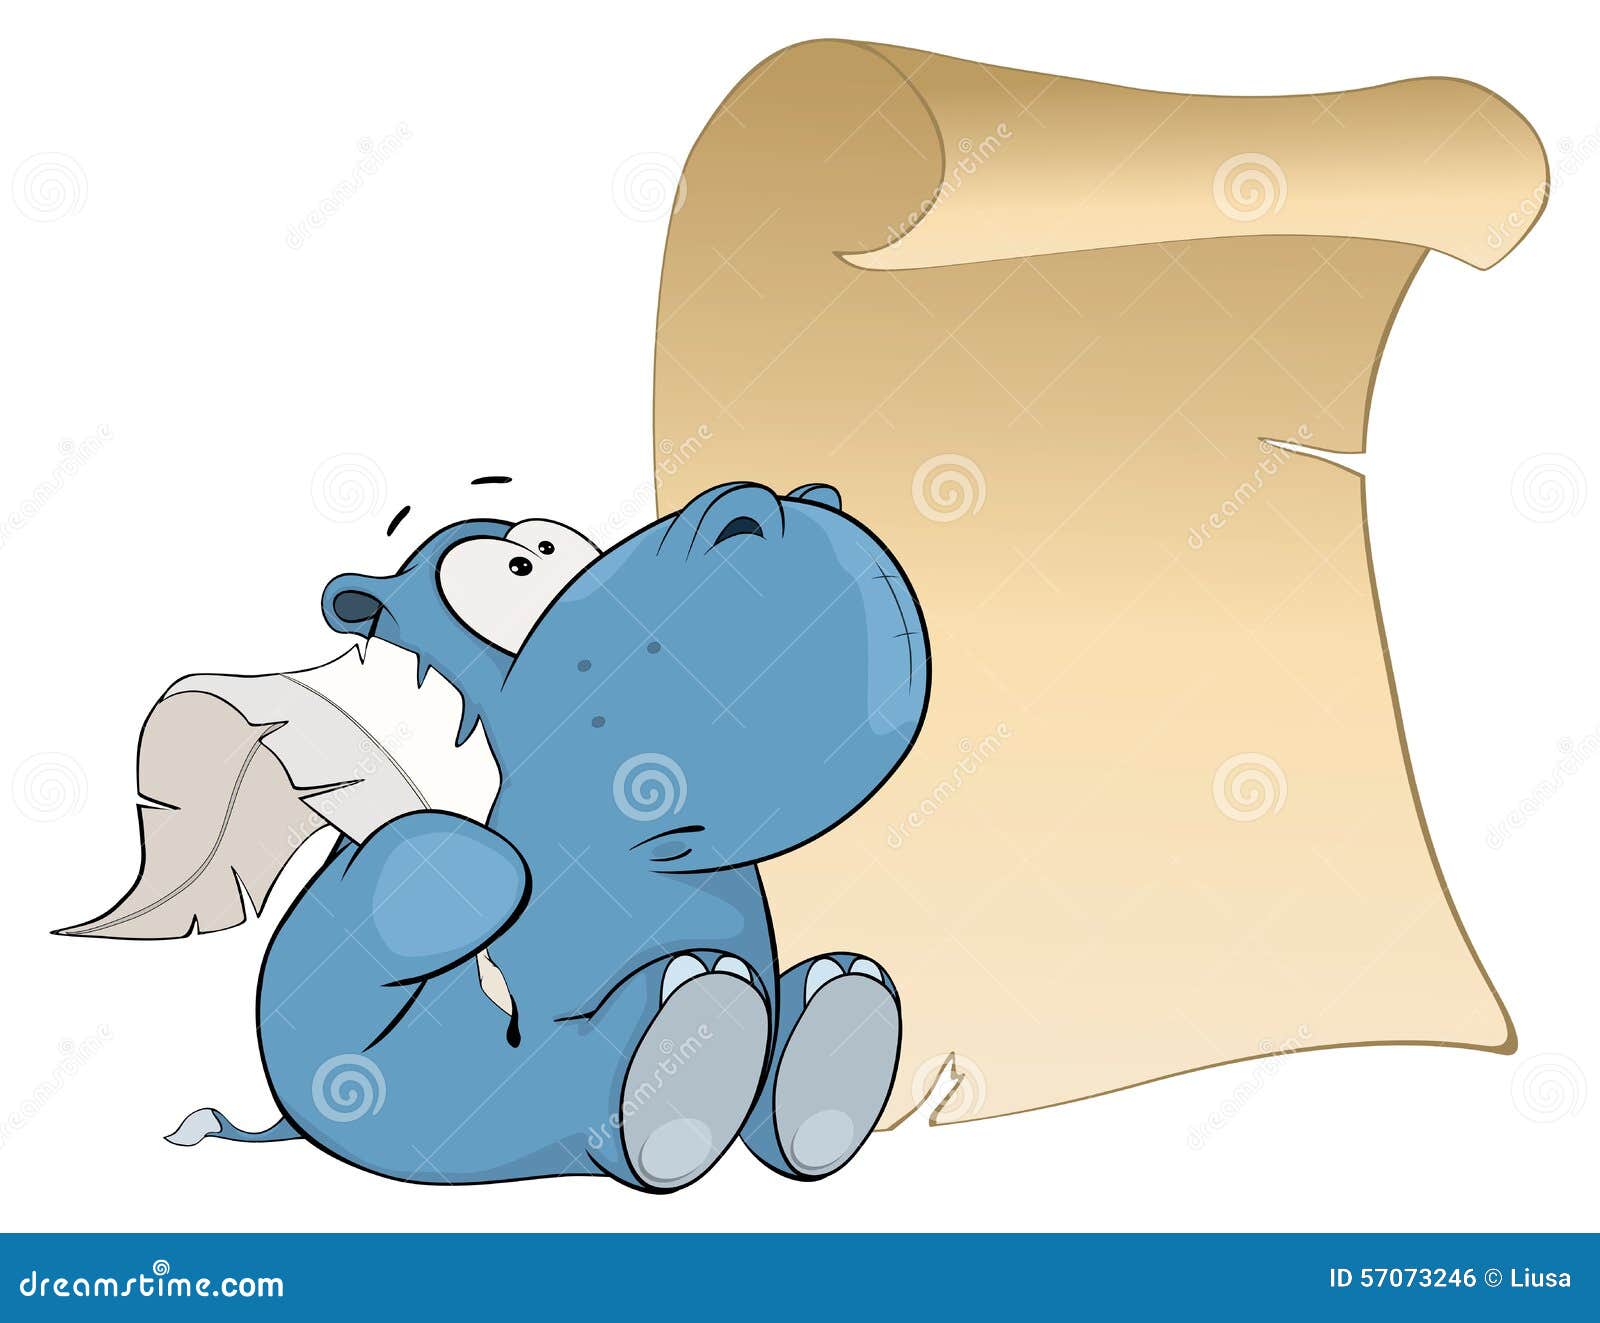 little hippo-poet cartoon